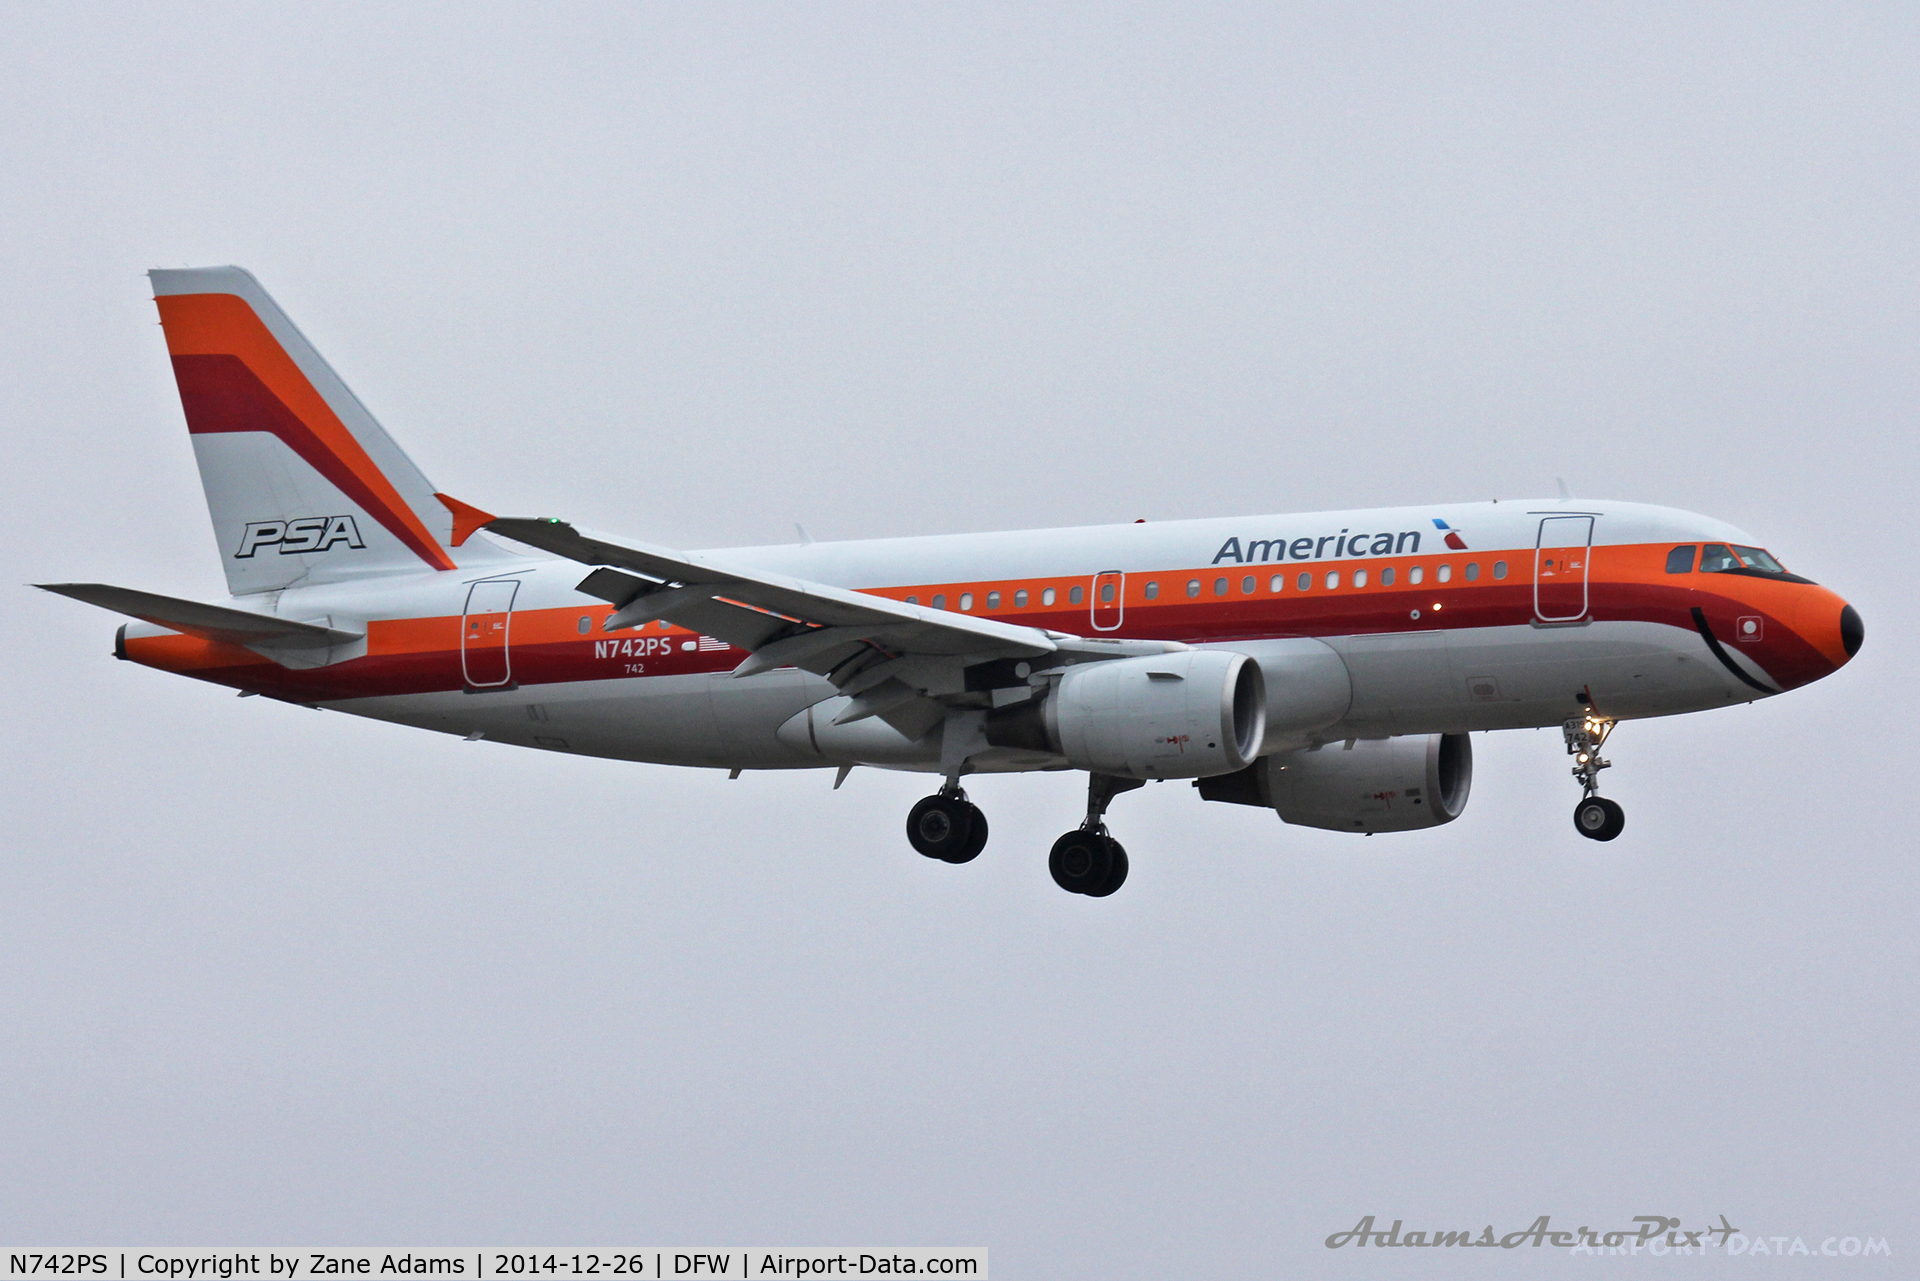 N742PS, 2000 Airbus A319-112 C/N 1275, Landing at DFW Airport